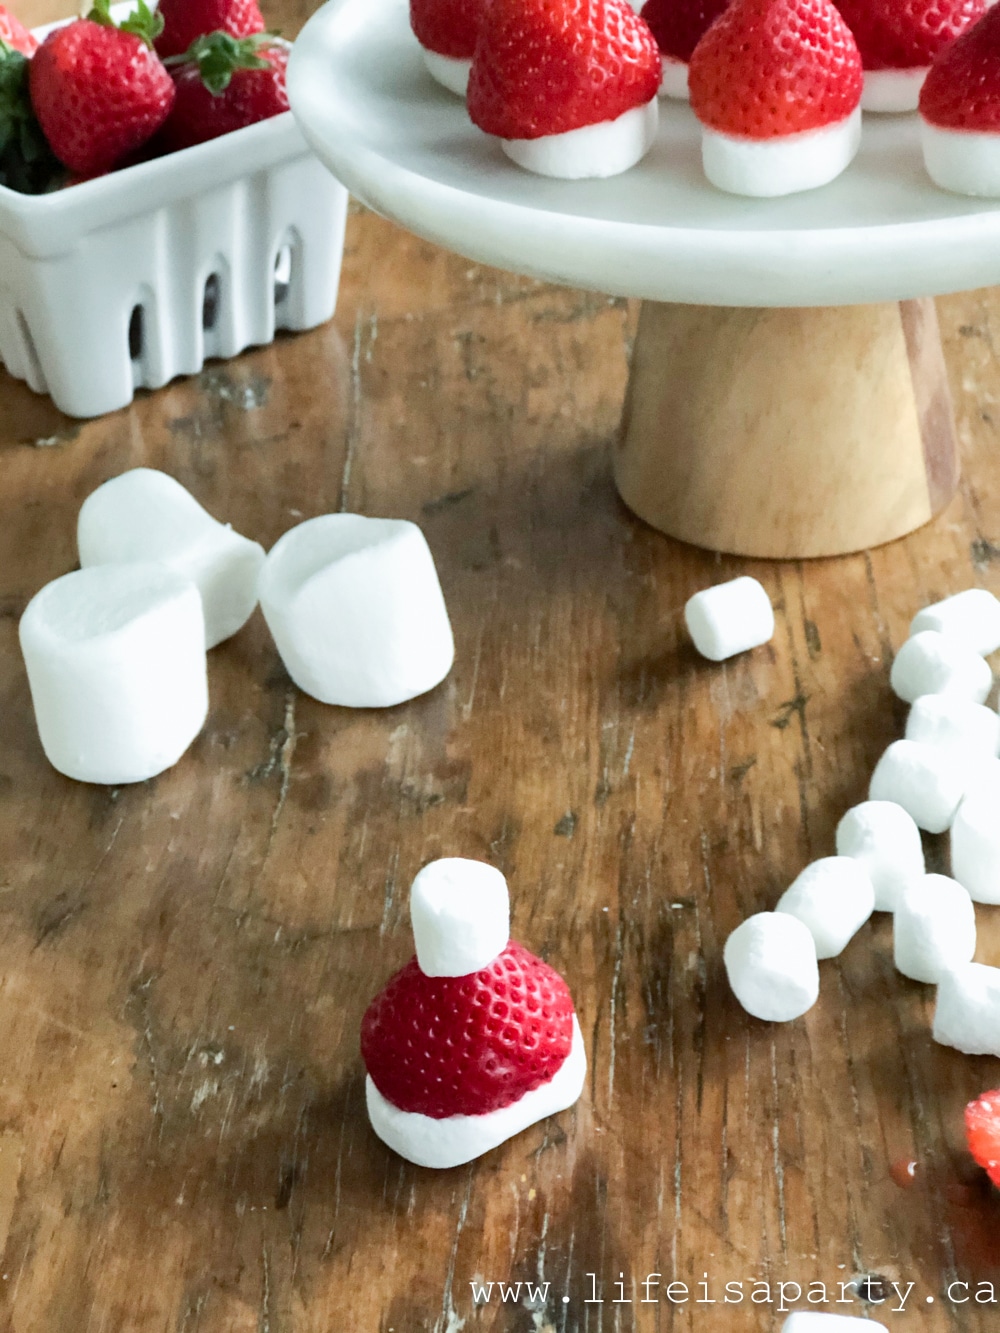 Strawberry and marshmallow Santa hats